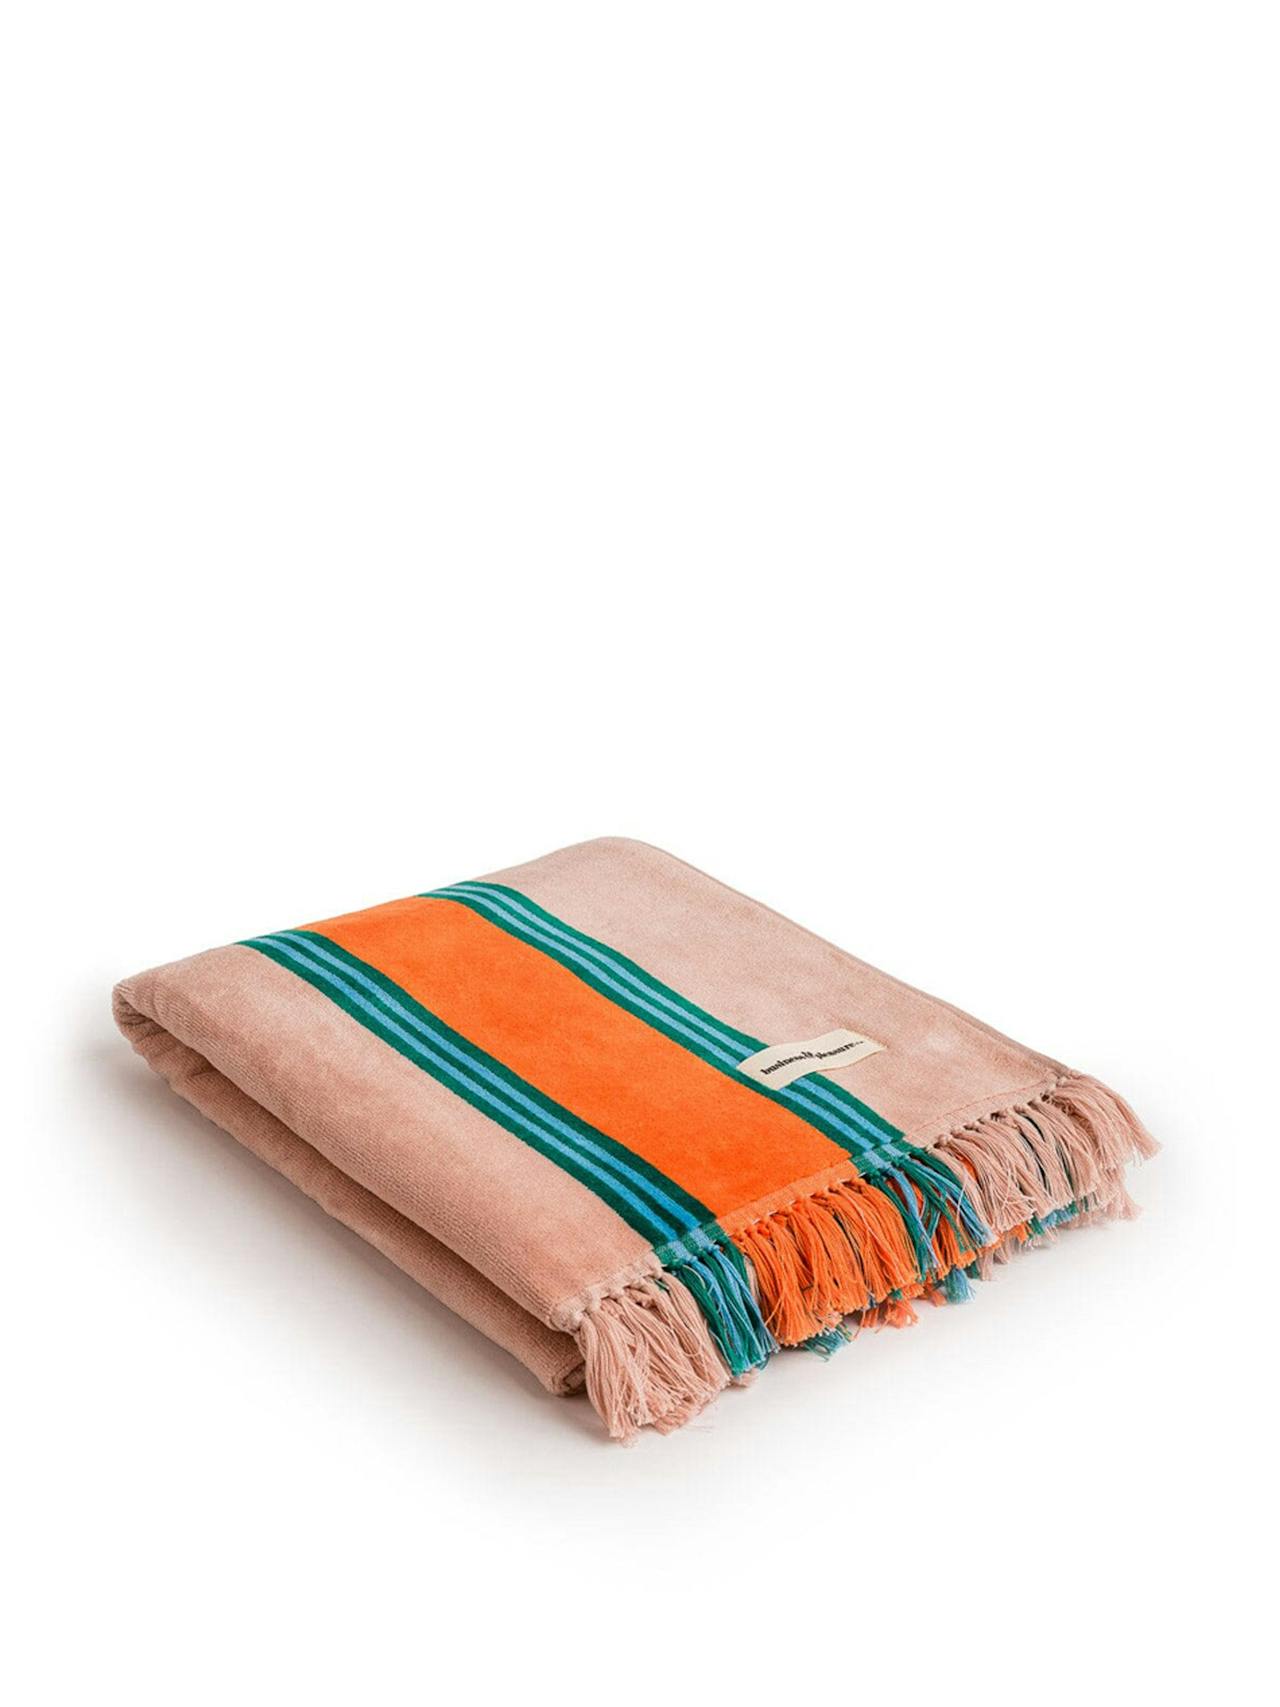 The beach towel - bistro dusty pink stripe